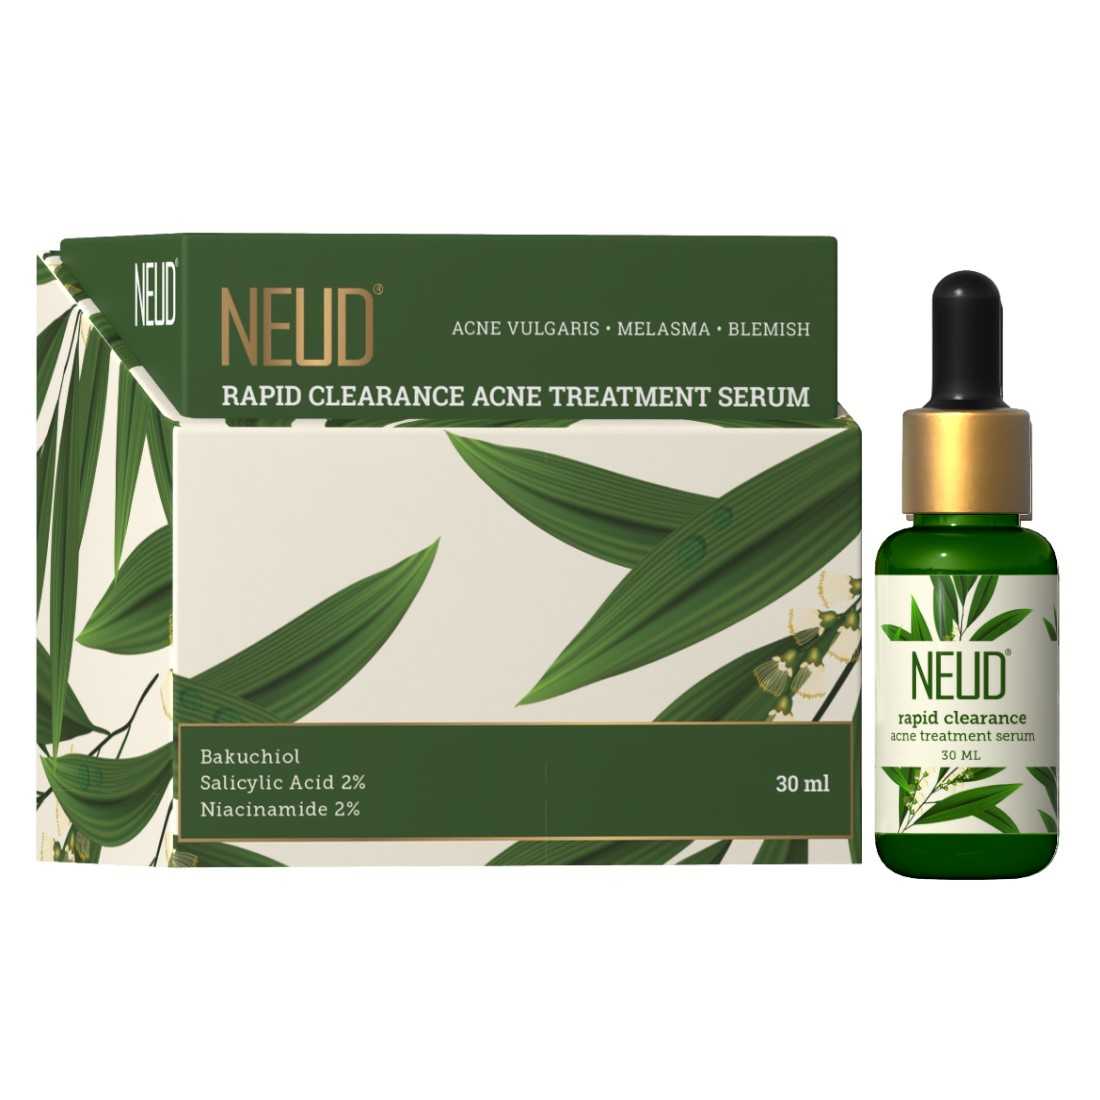 NEUD Rapid Clearance Acne Treatment Serum With Salicylic Acid, Bakuchiol and Niacinamide - 30 ml